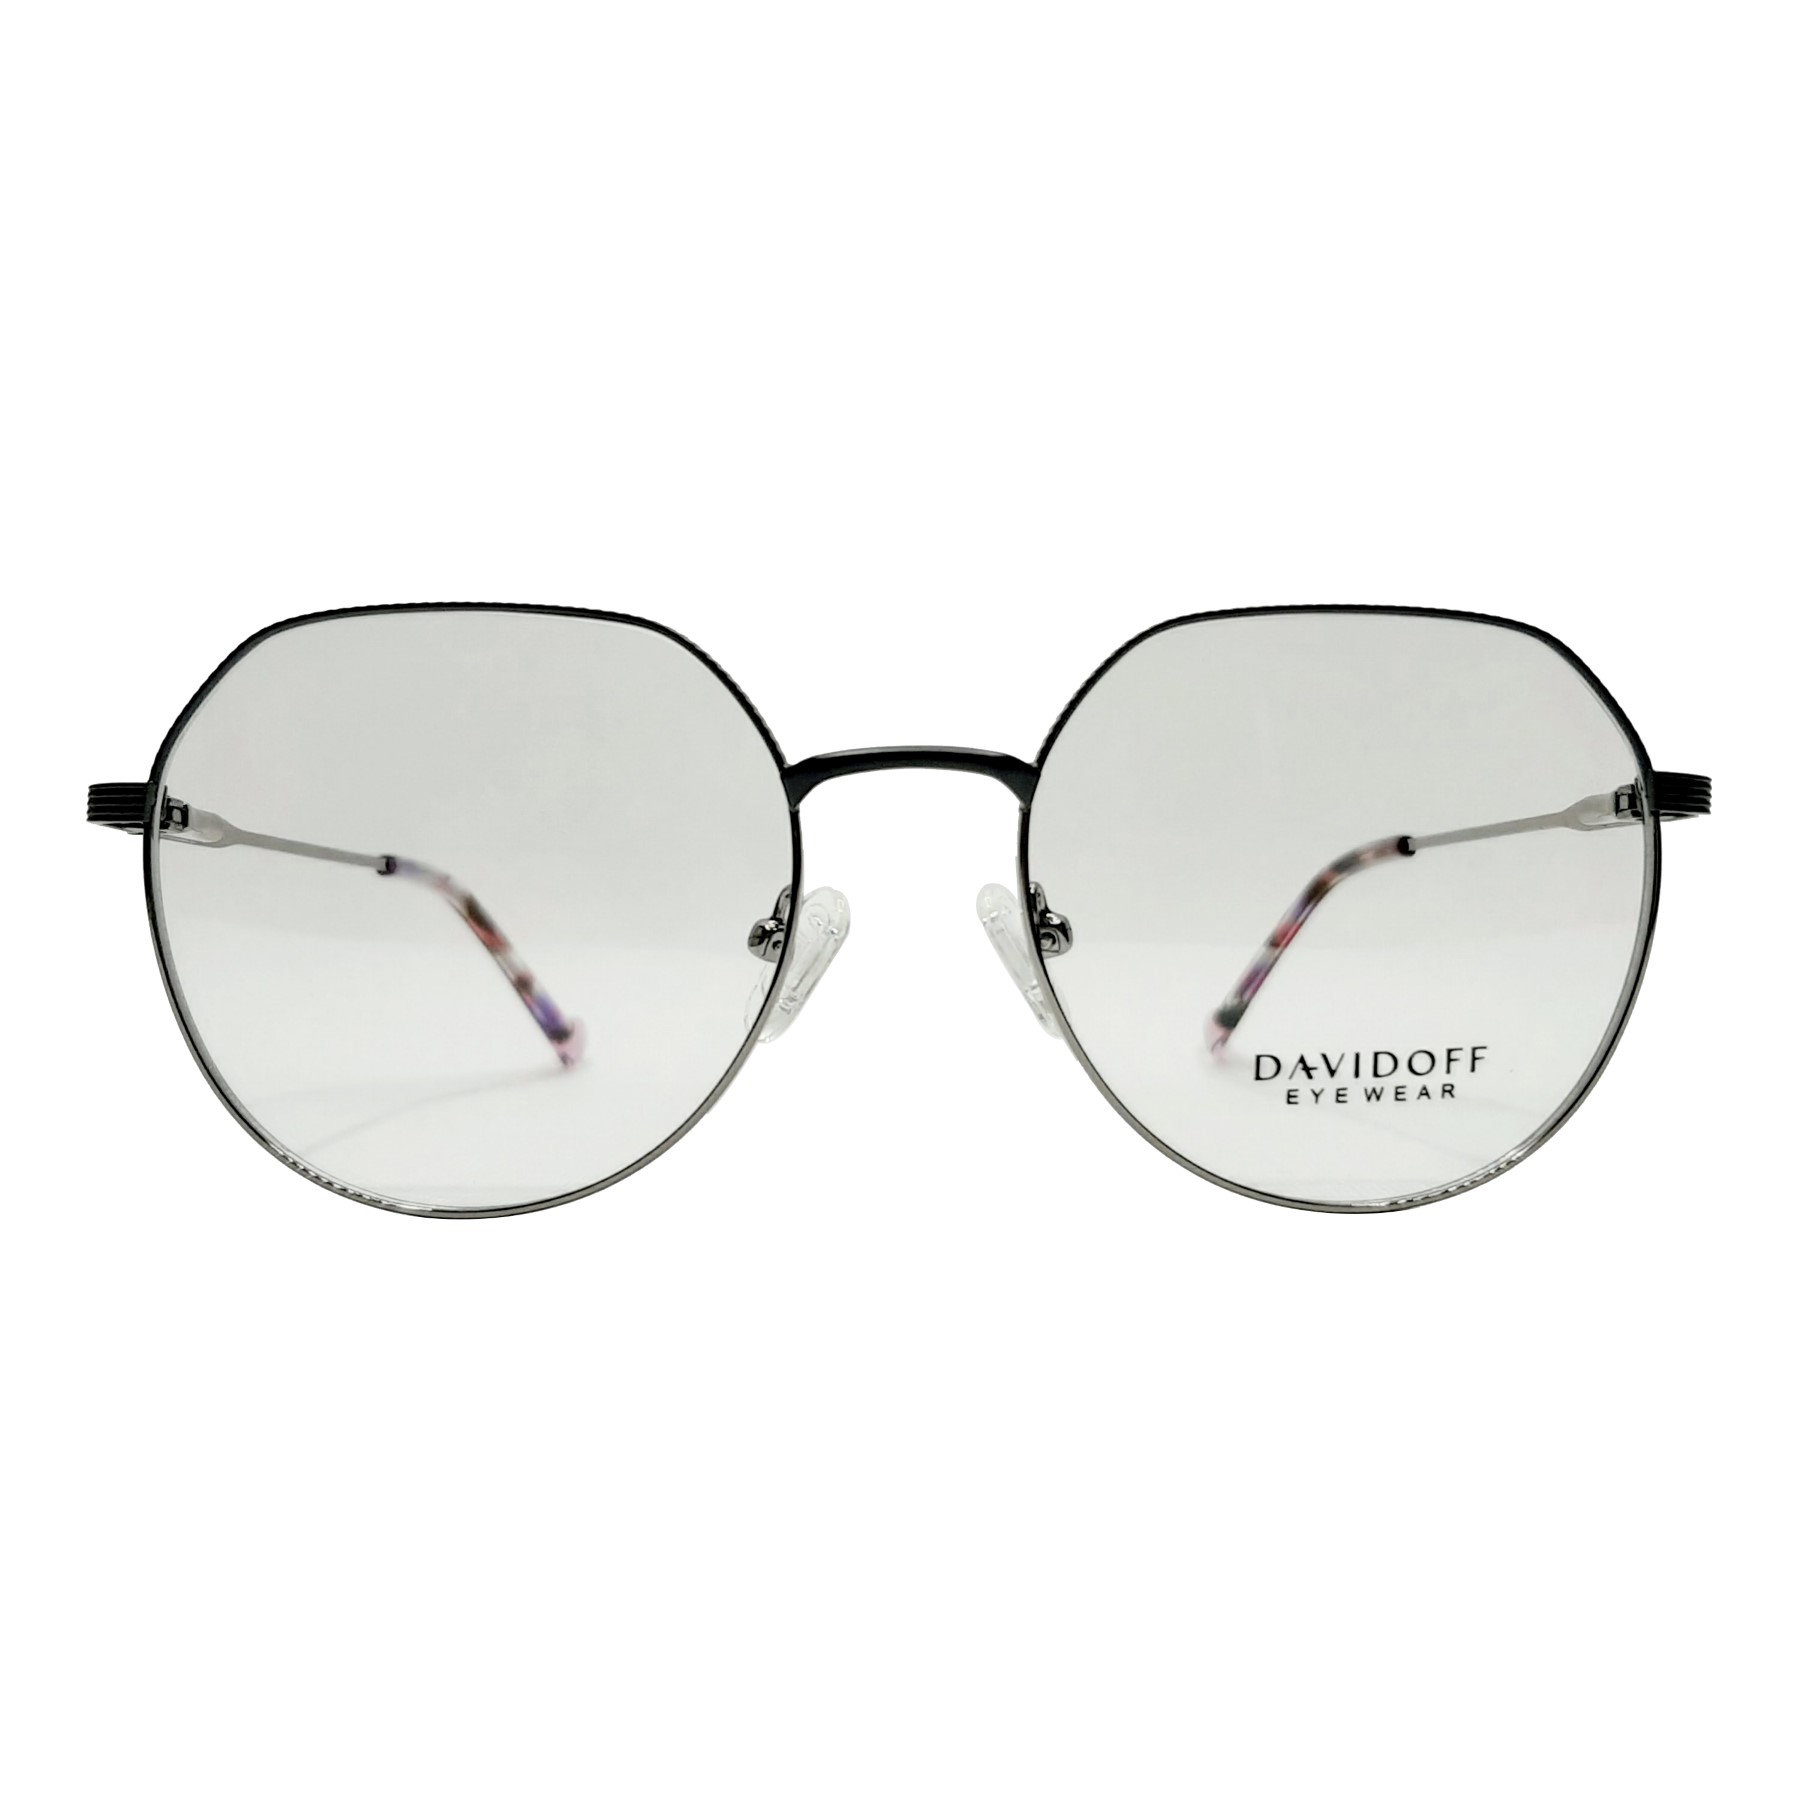 فریم عینک طبی داویدف مدل D8302c1